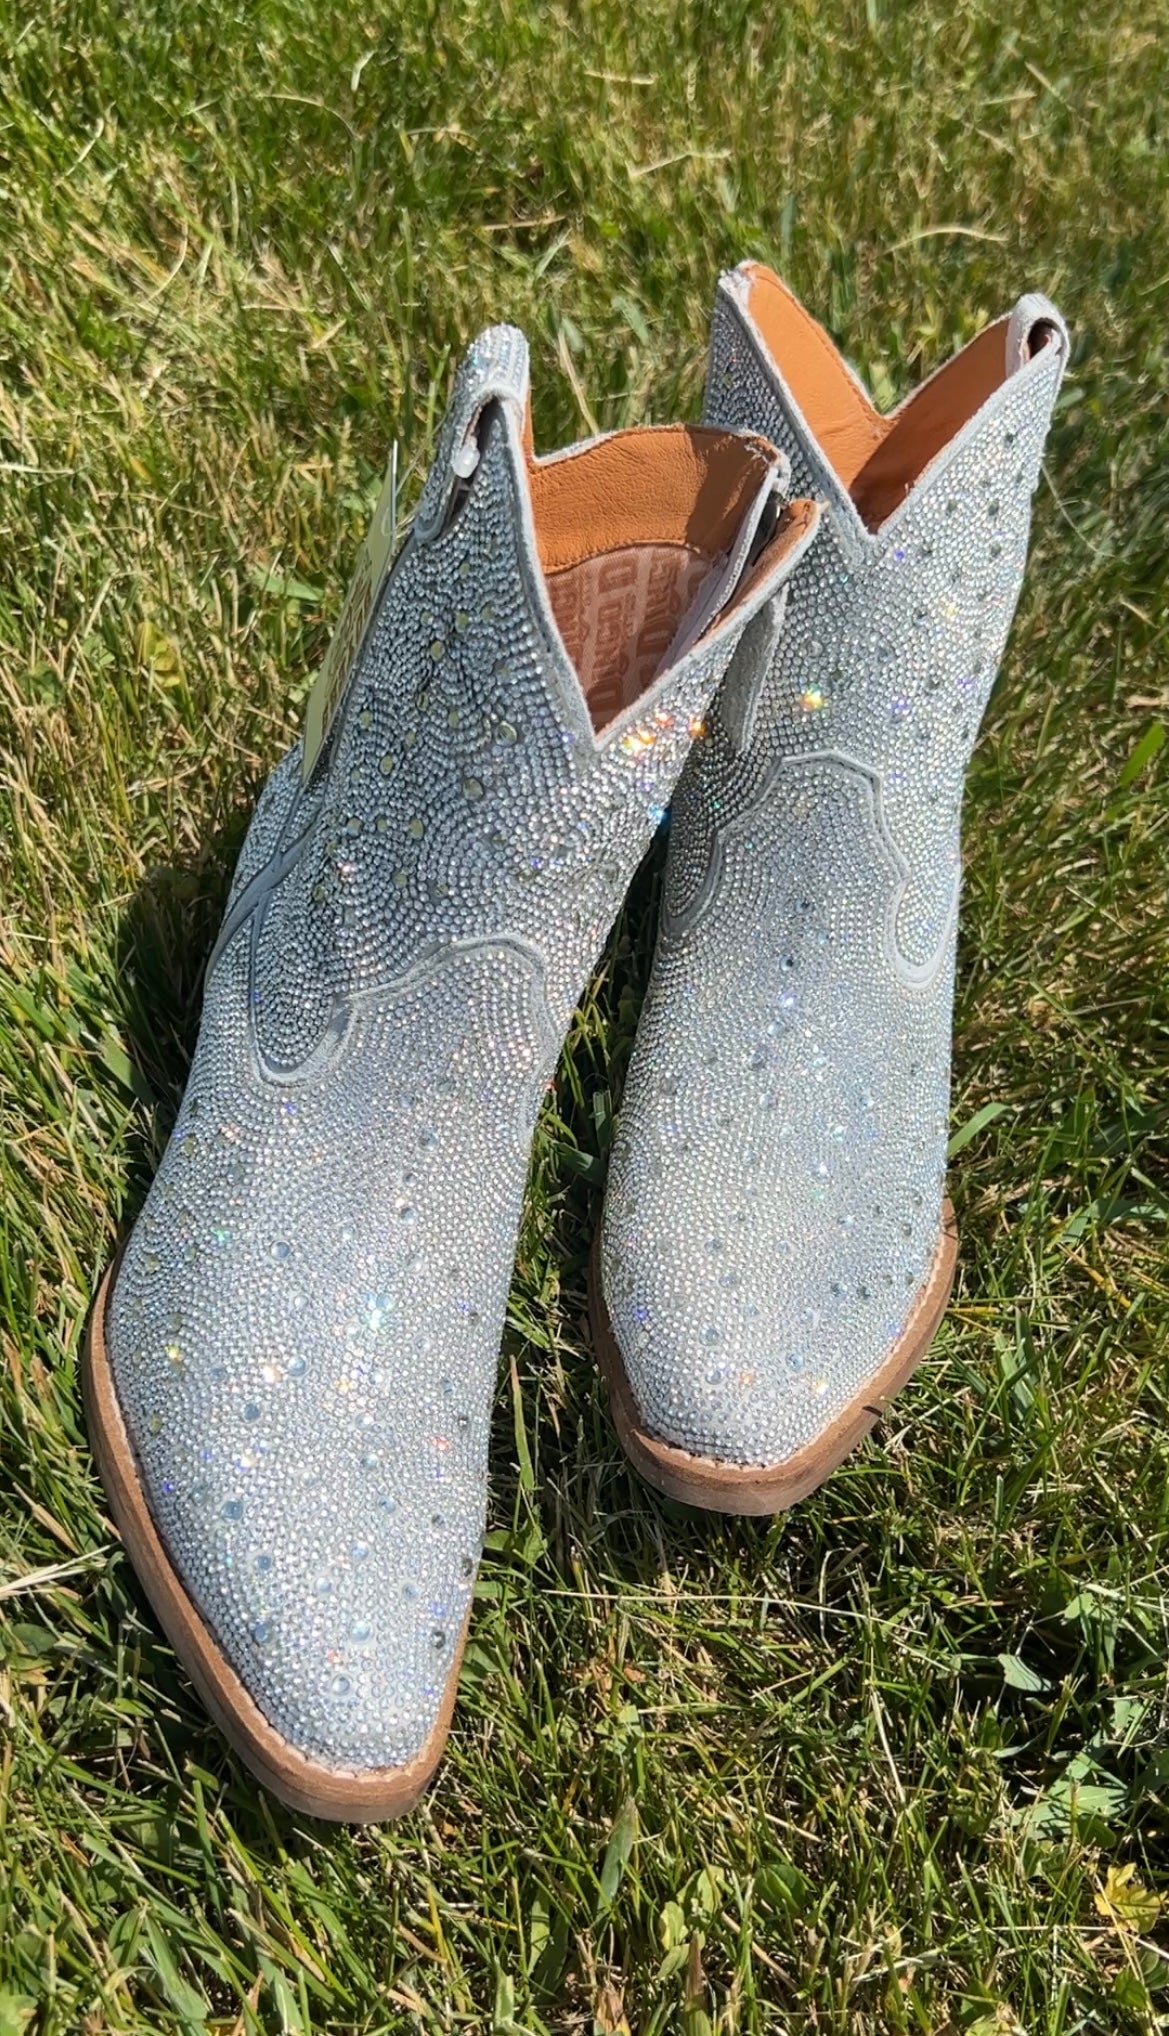 Dingo sliver dollar boots sitting in green grass